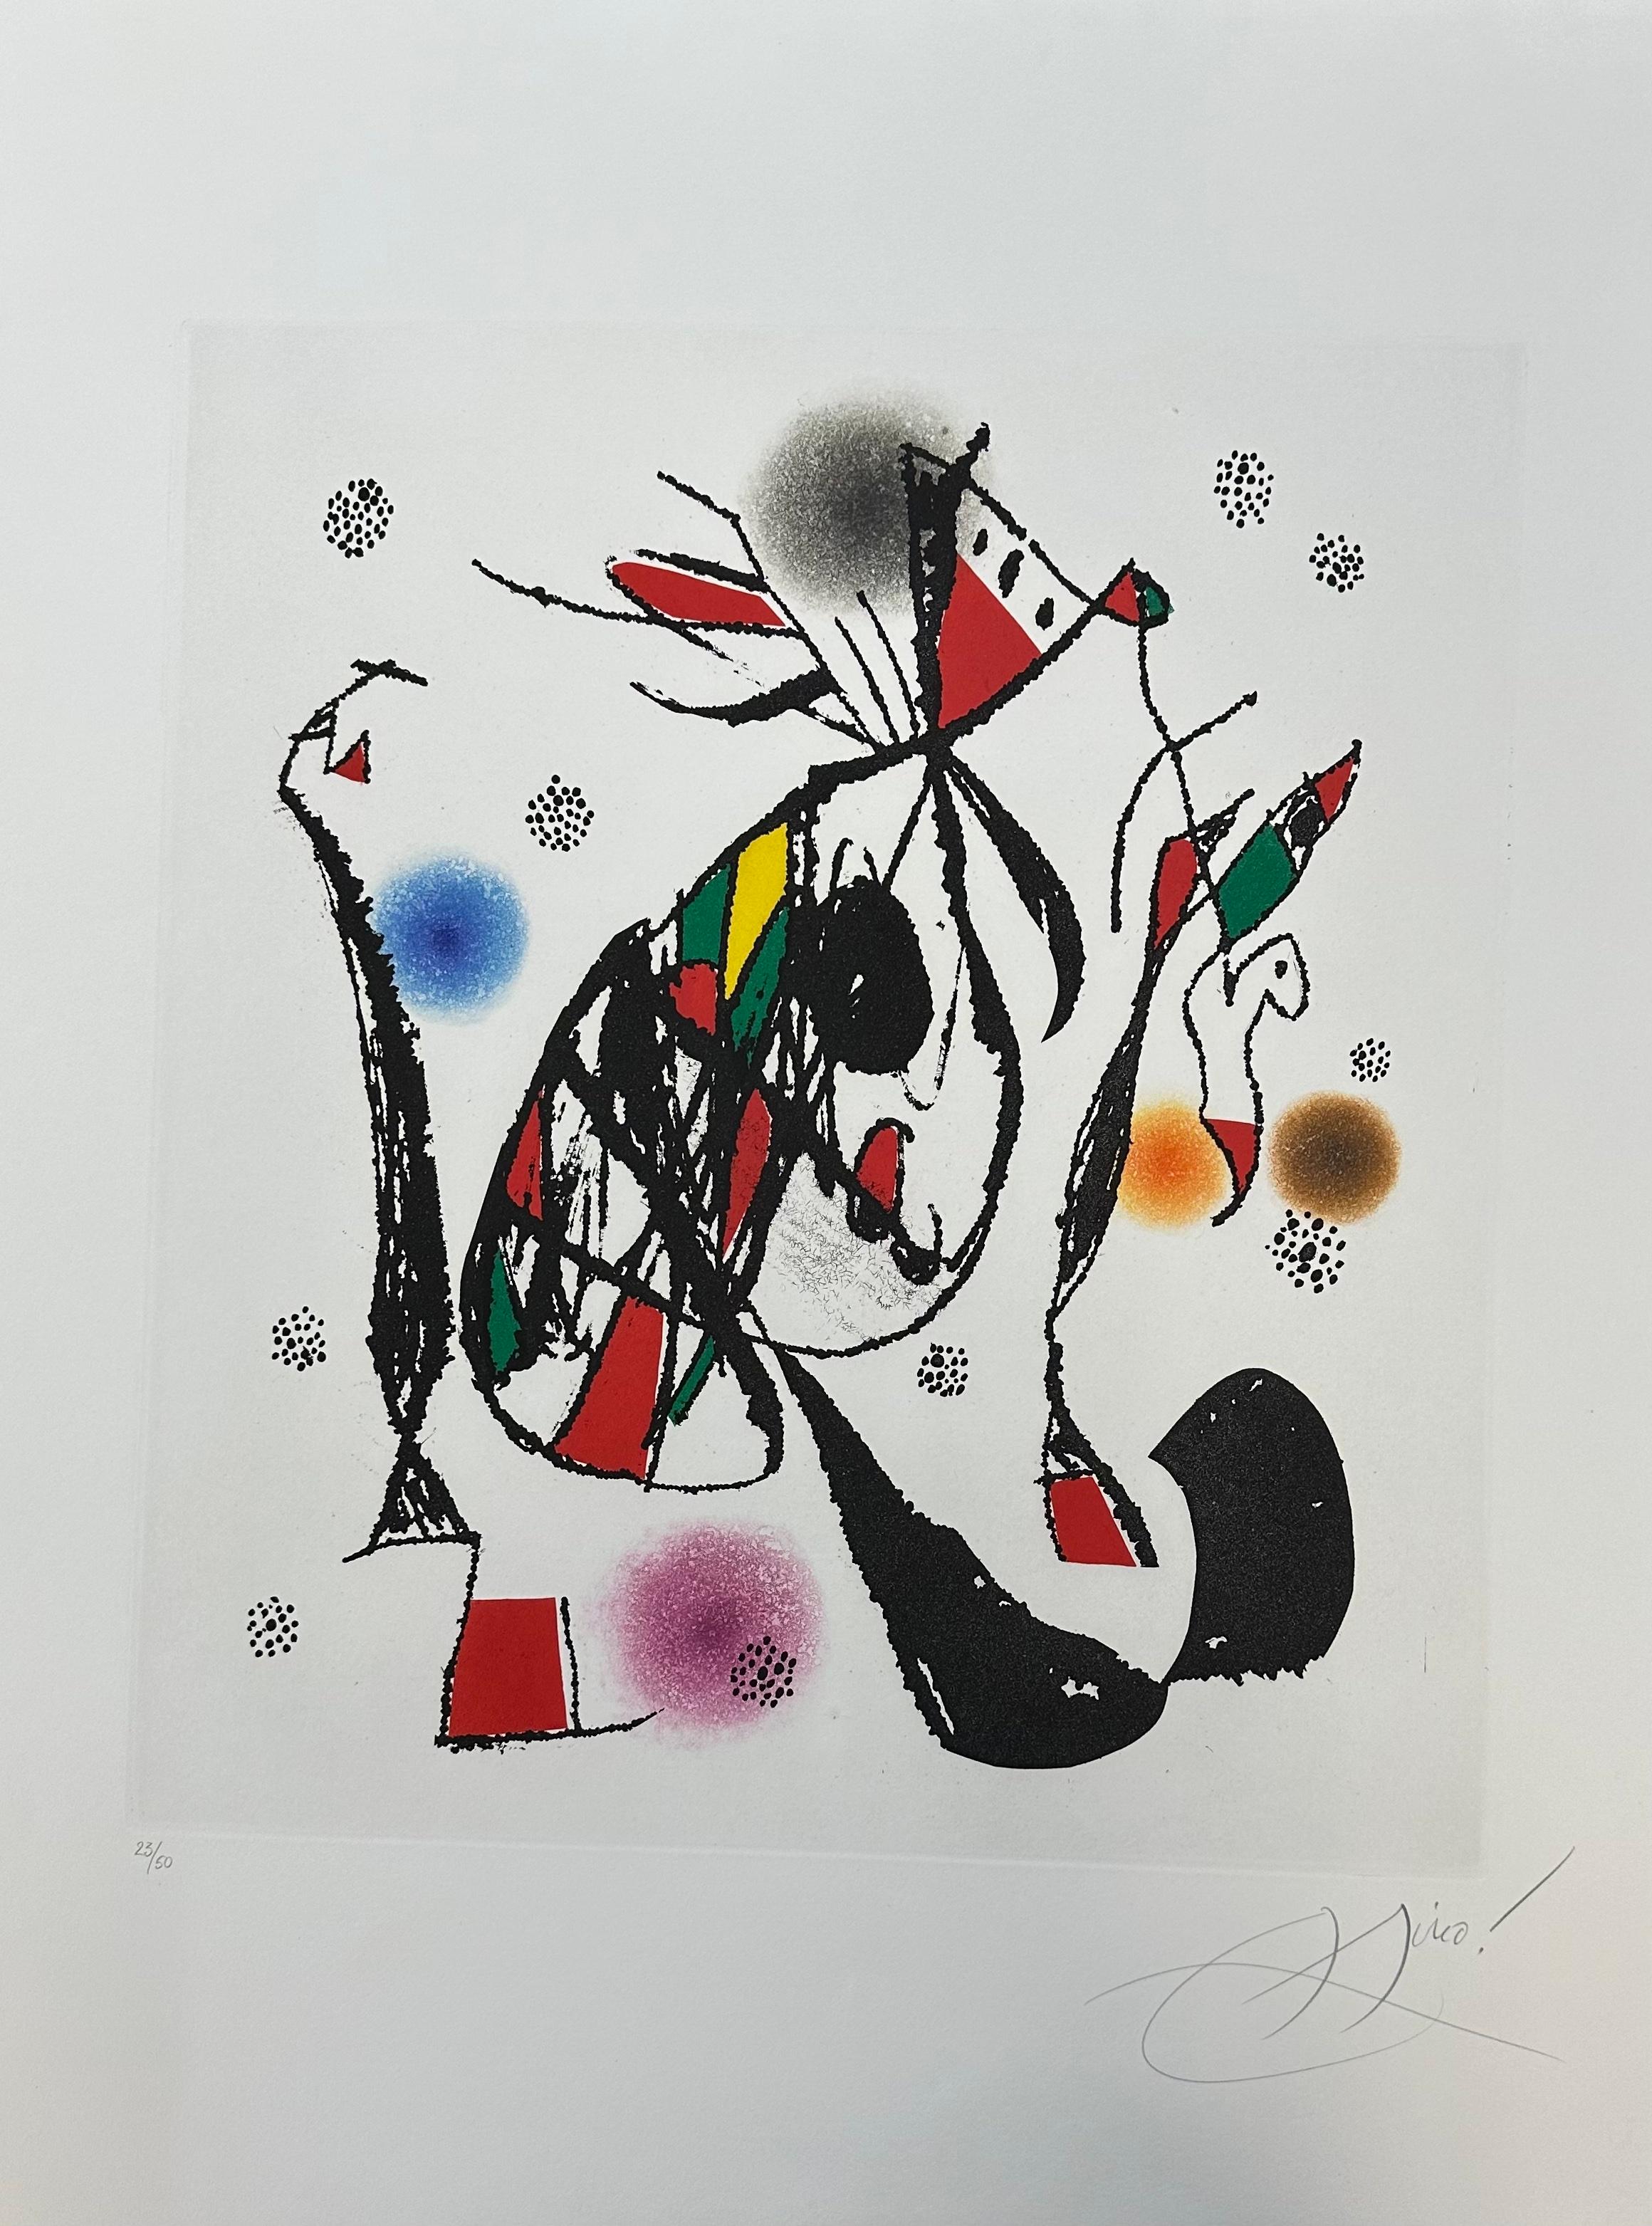 Joan Miró, 